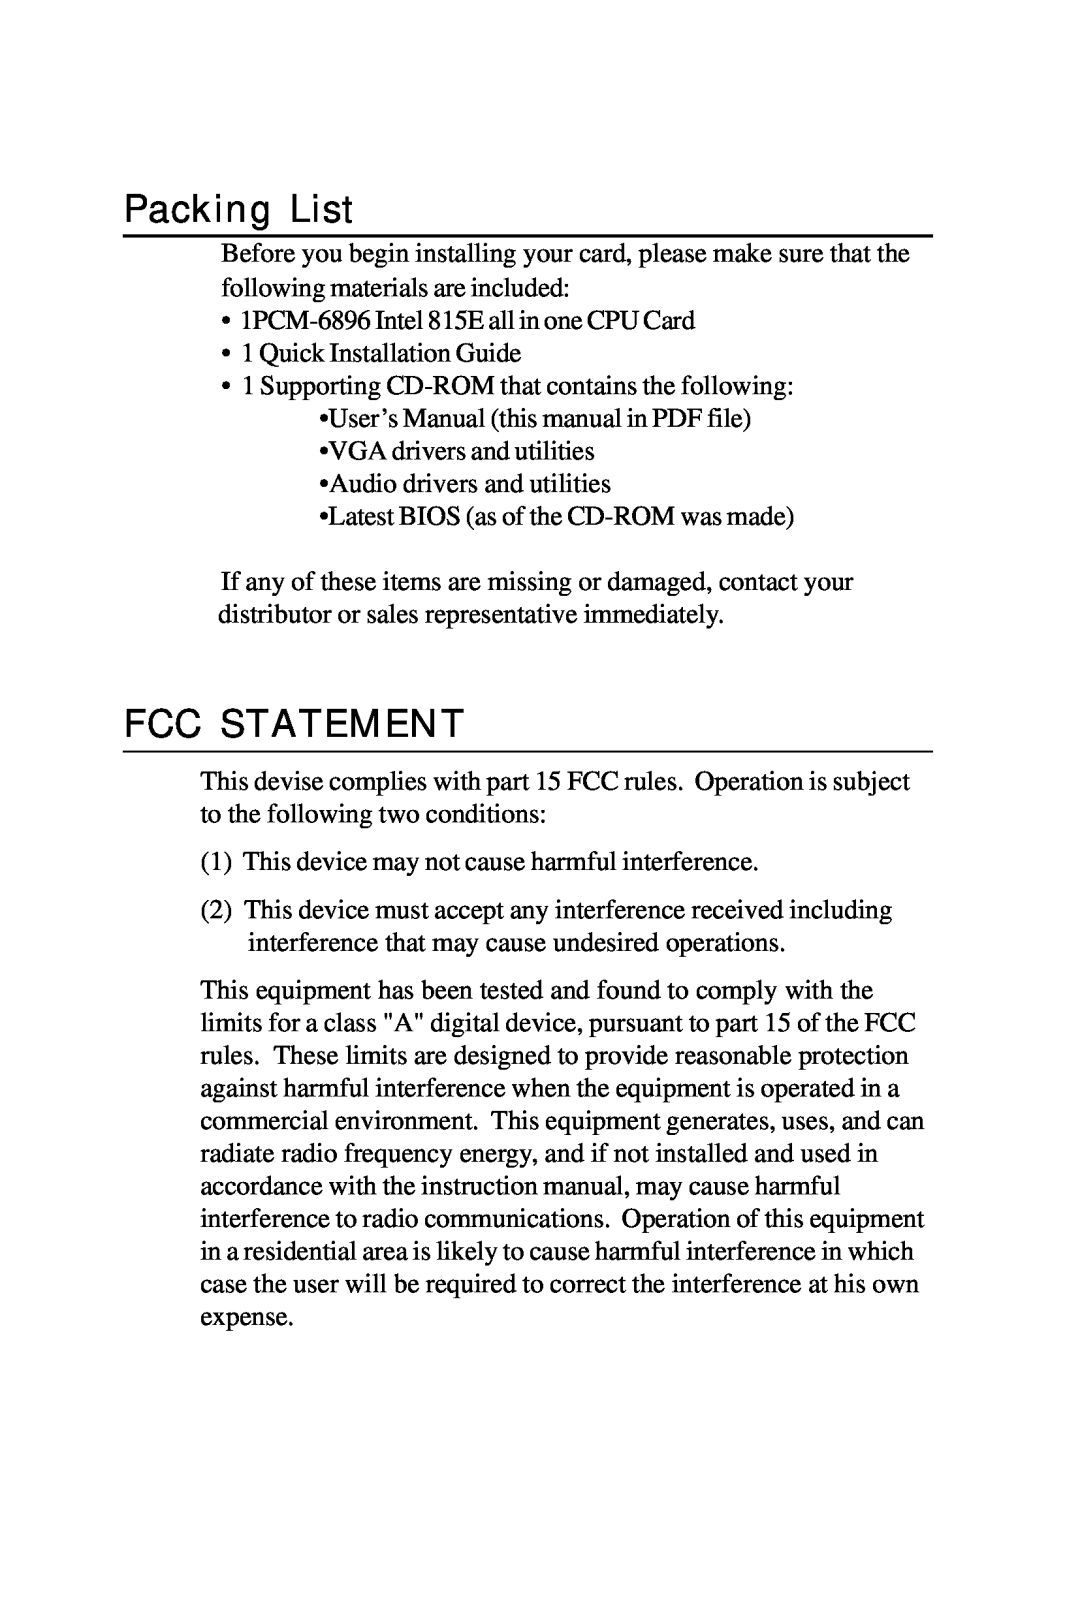 Intel PCM-6896 manual Packing List, Fcc Statement 